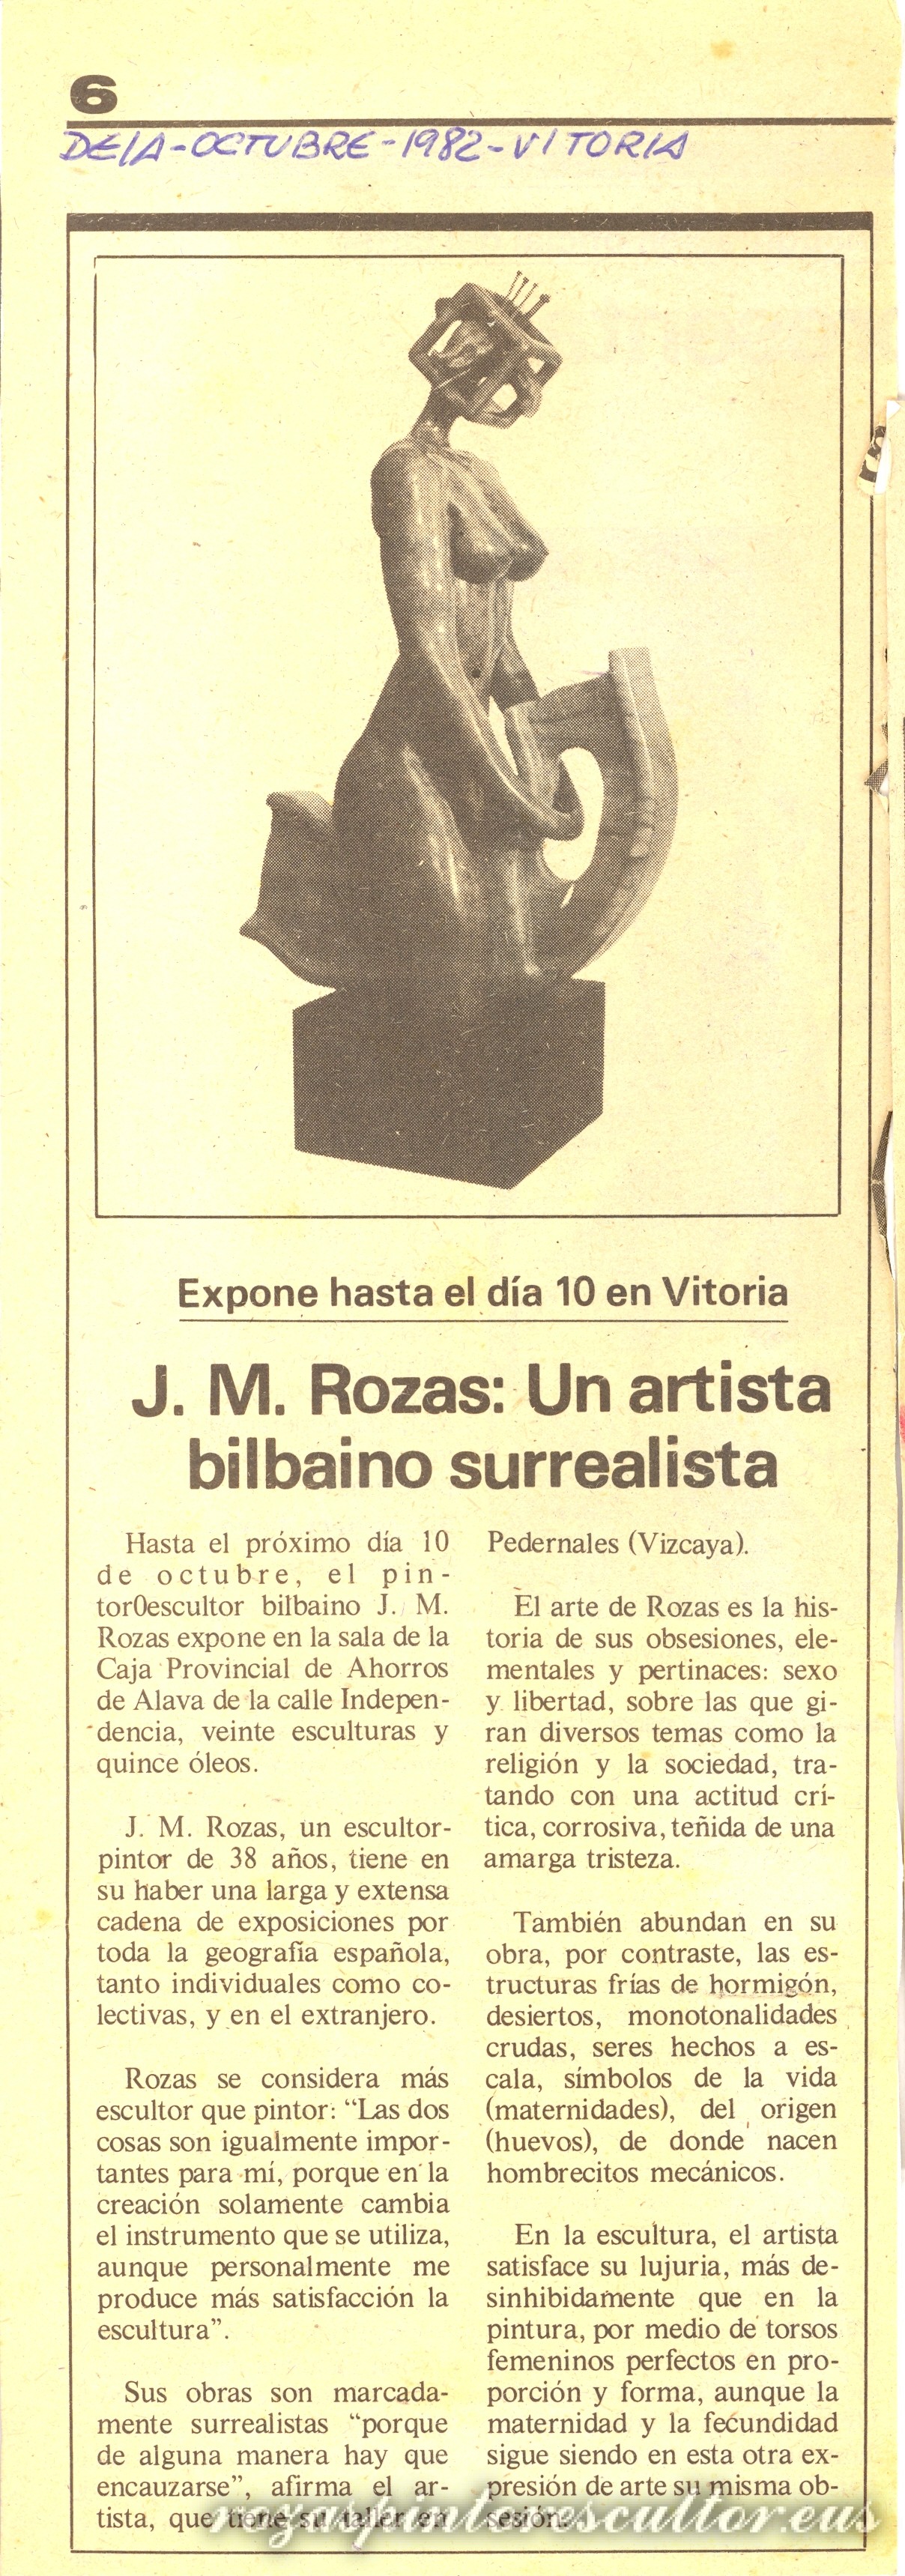 1982 Deia – J.M. Rozas: From Bilbao a surreal  artist